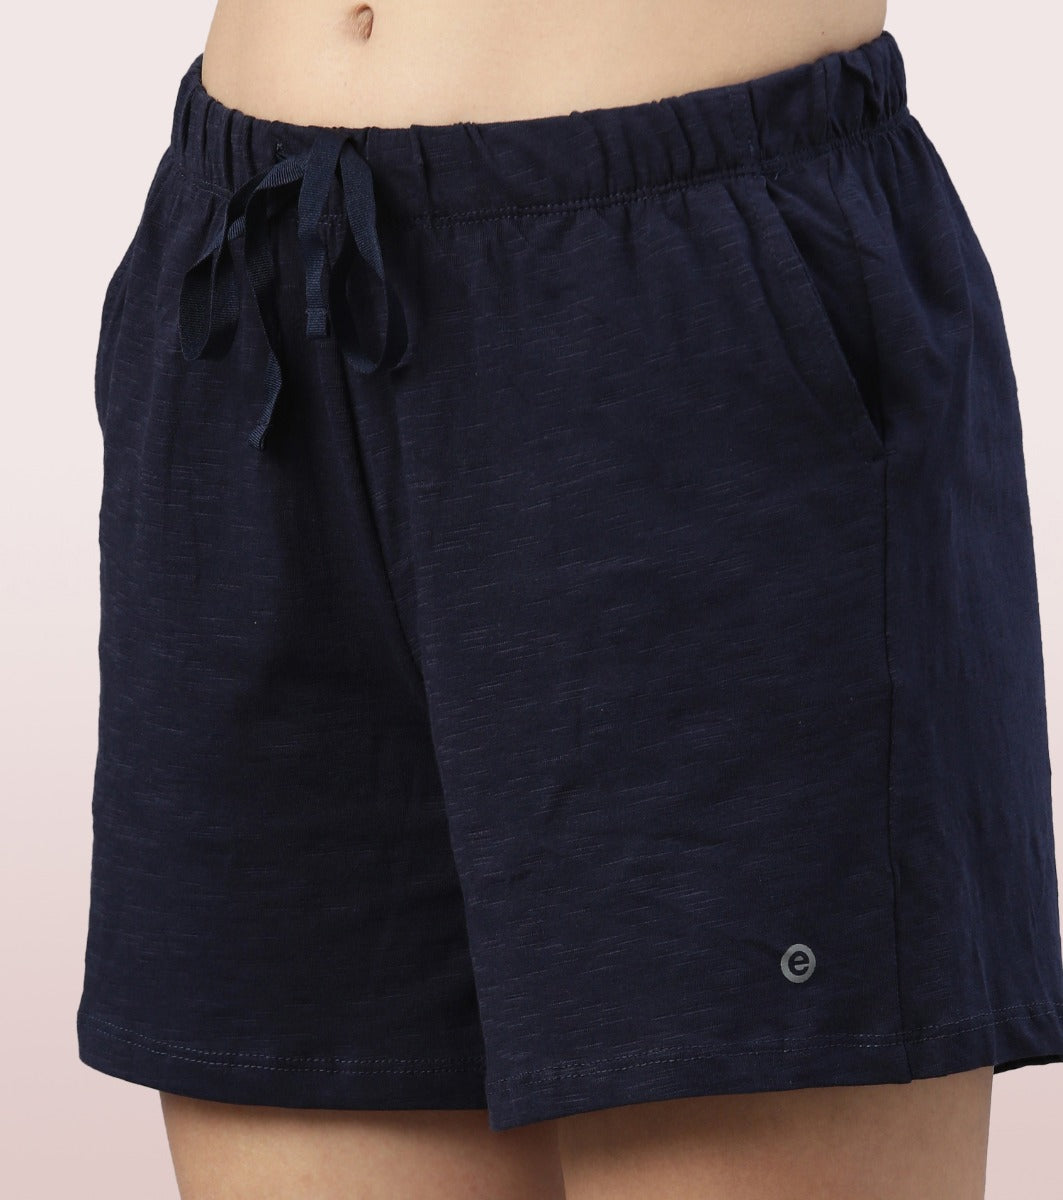 Basic Shorts | Mid-Thigh Length Jersey Shorts With Pockets